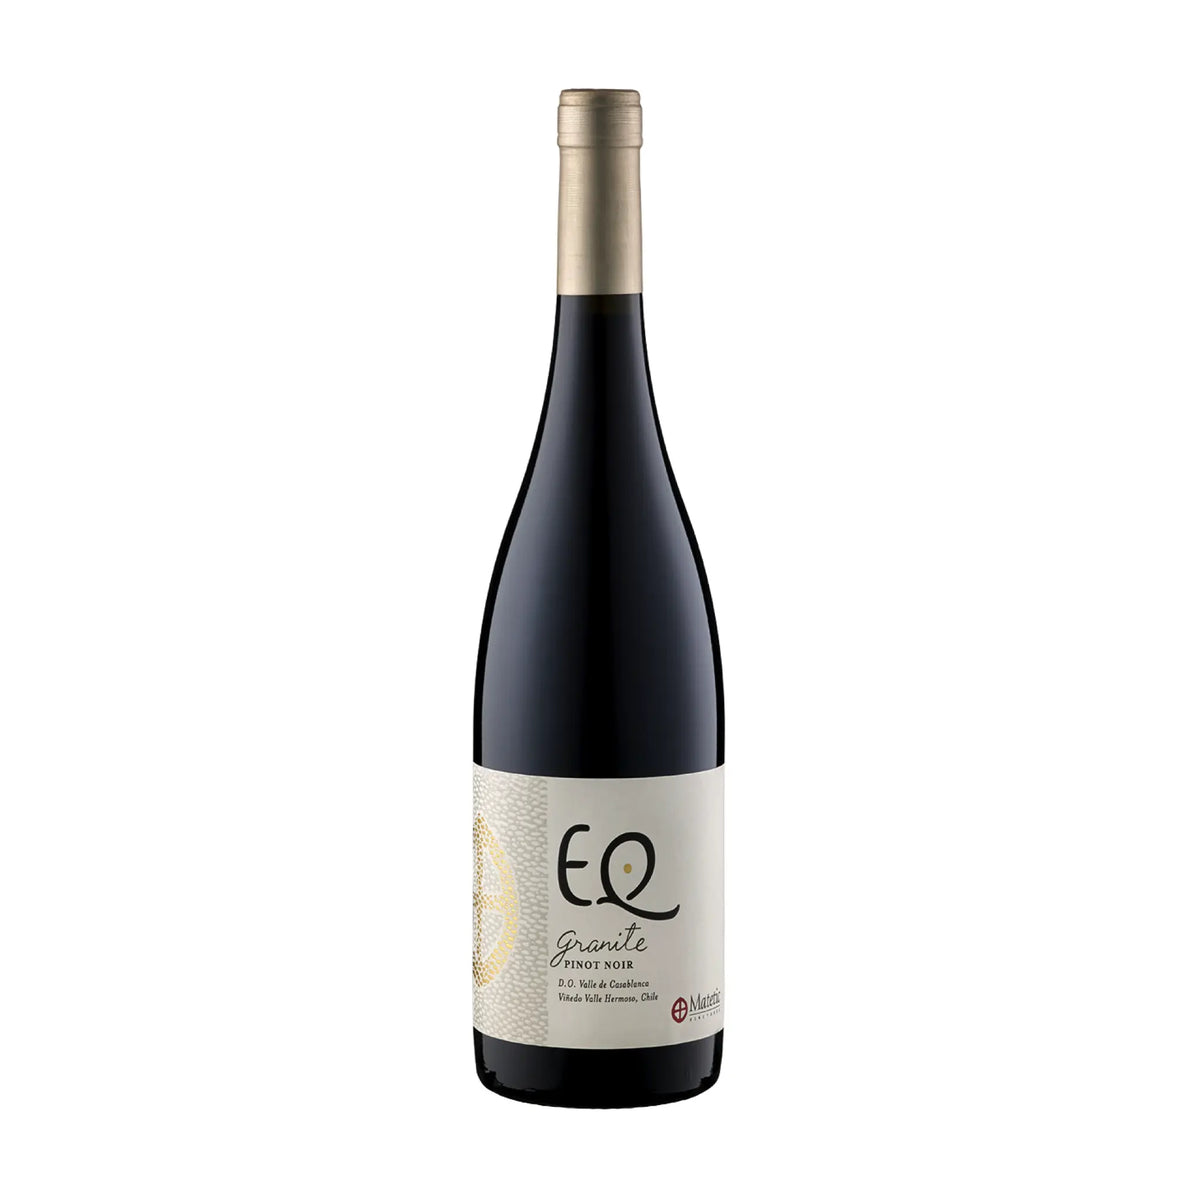 Matetic Vineyards-Rotwein-Pinot Noir-Chile-Casablanca-2019 EQ Granite Pinot Noir - Bio-WINECOM